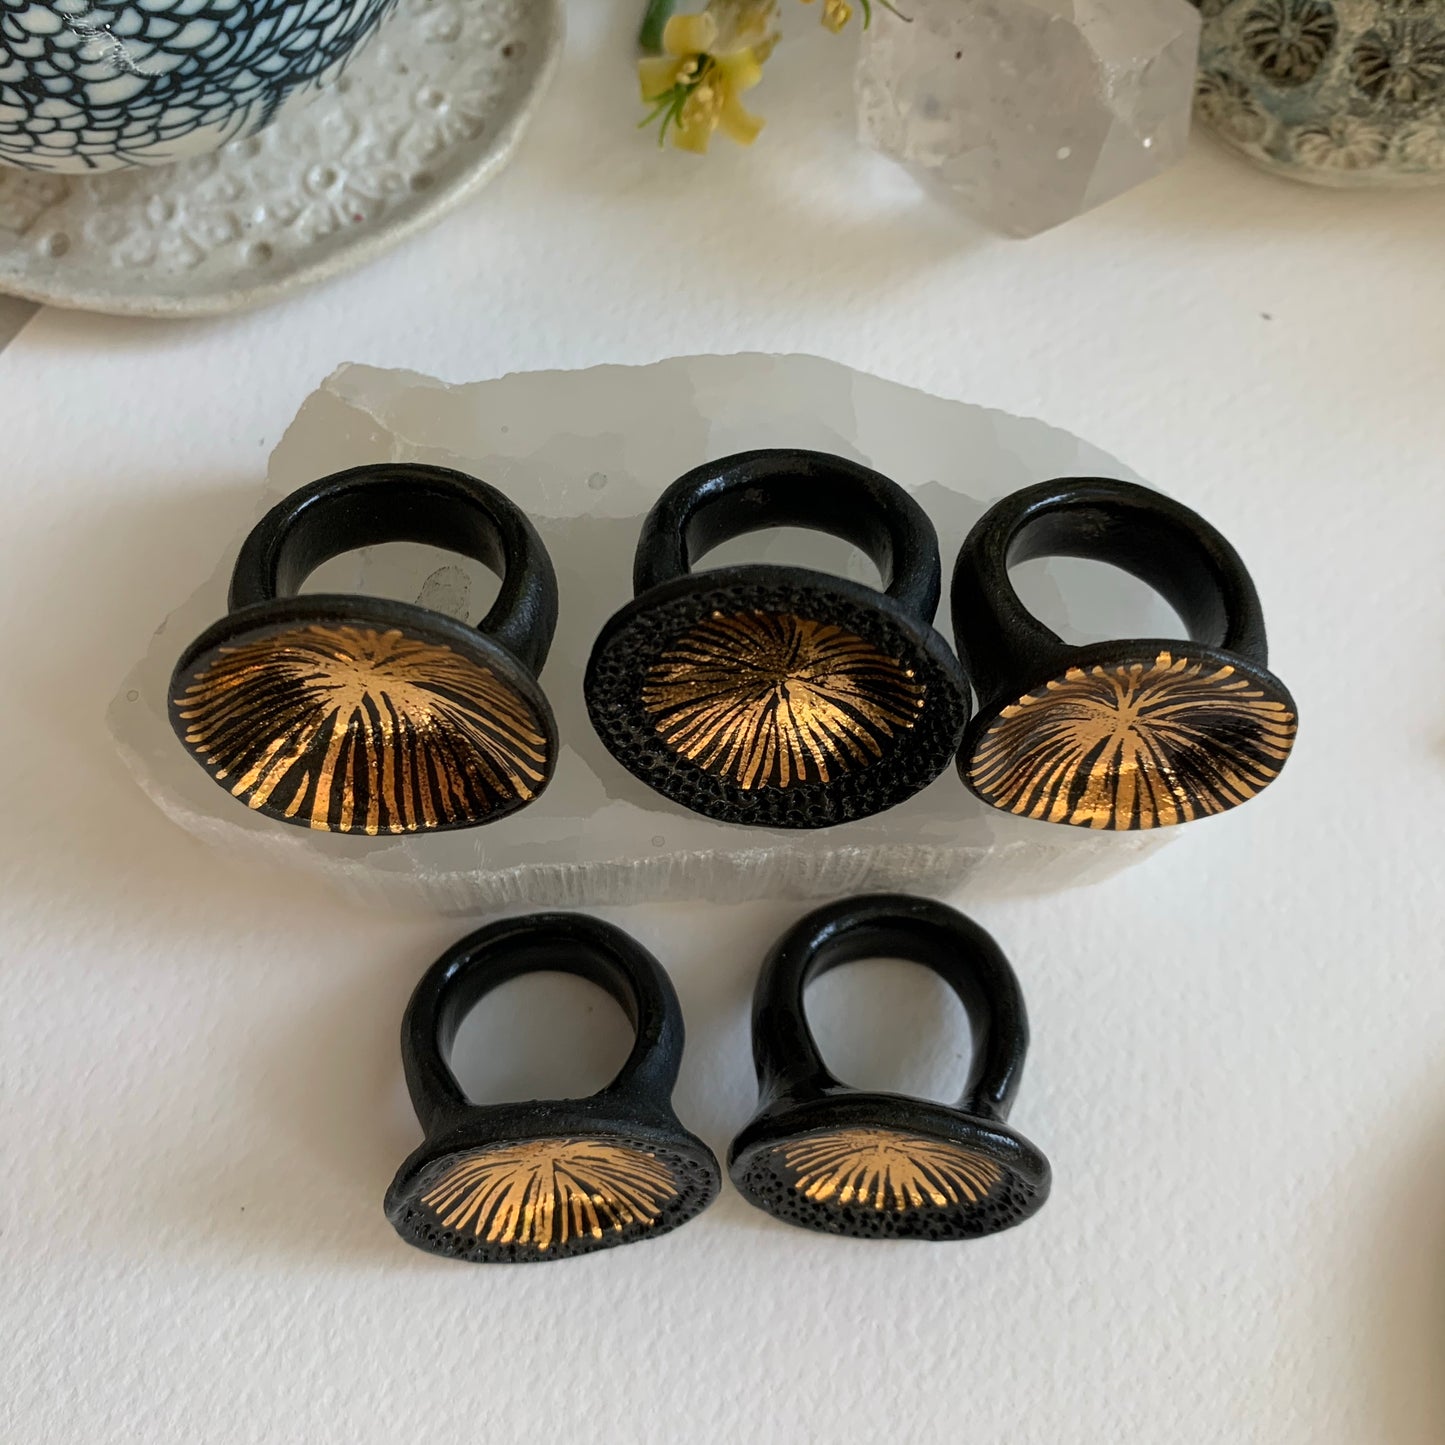 Black and gold lustre ‘Star’ porcelain ring